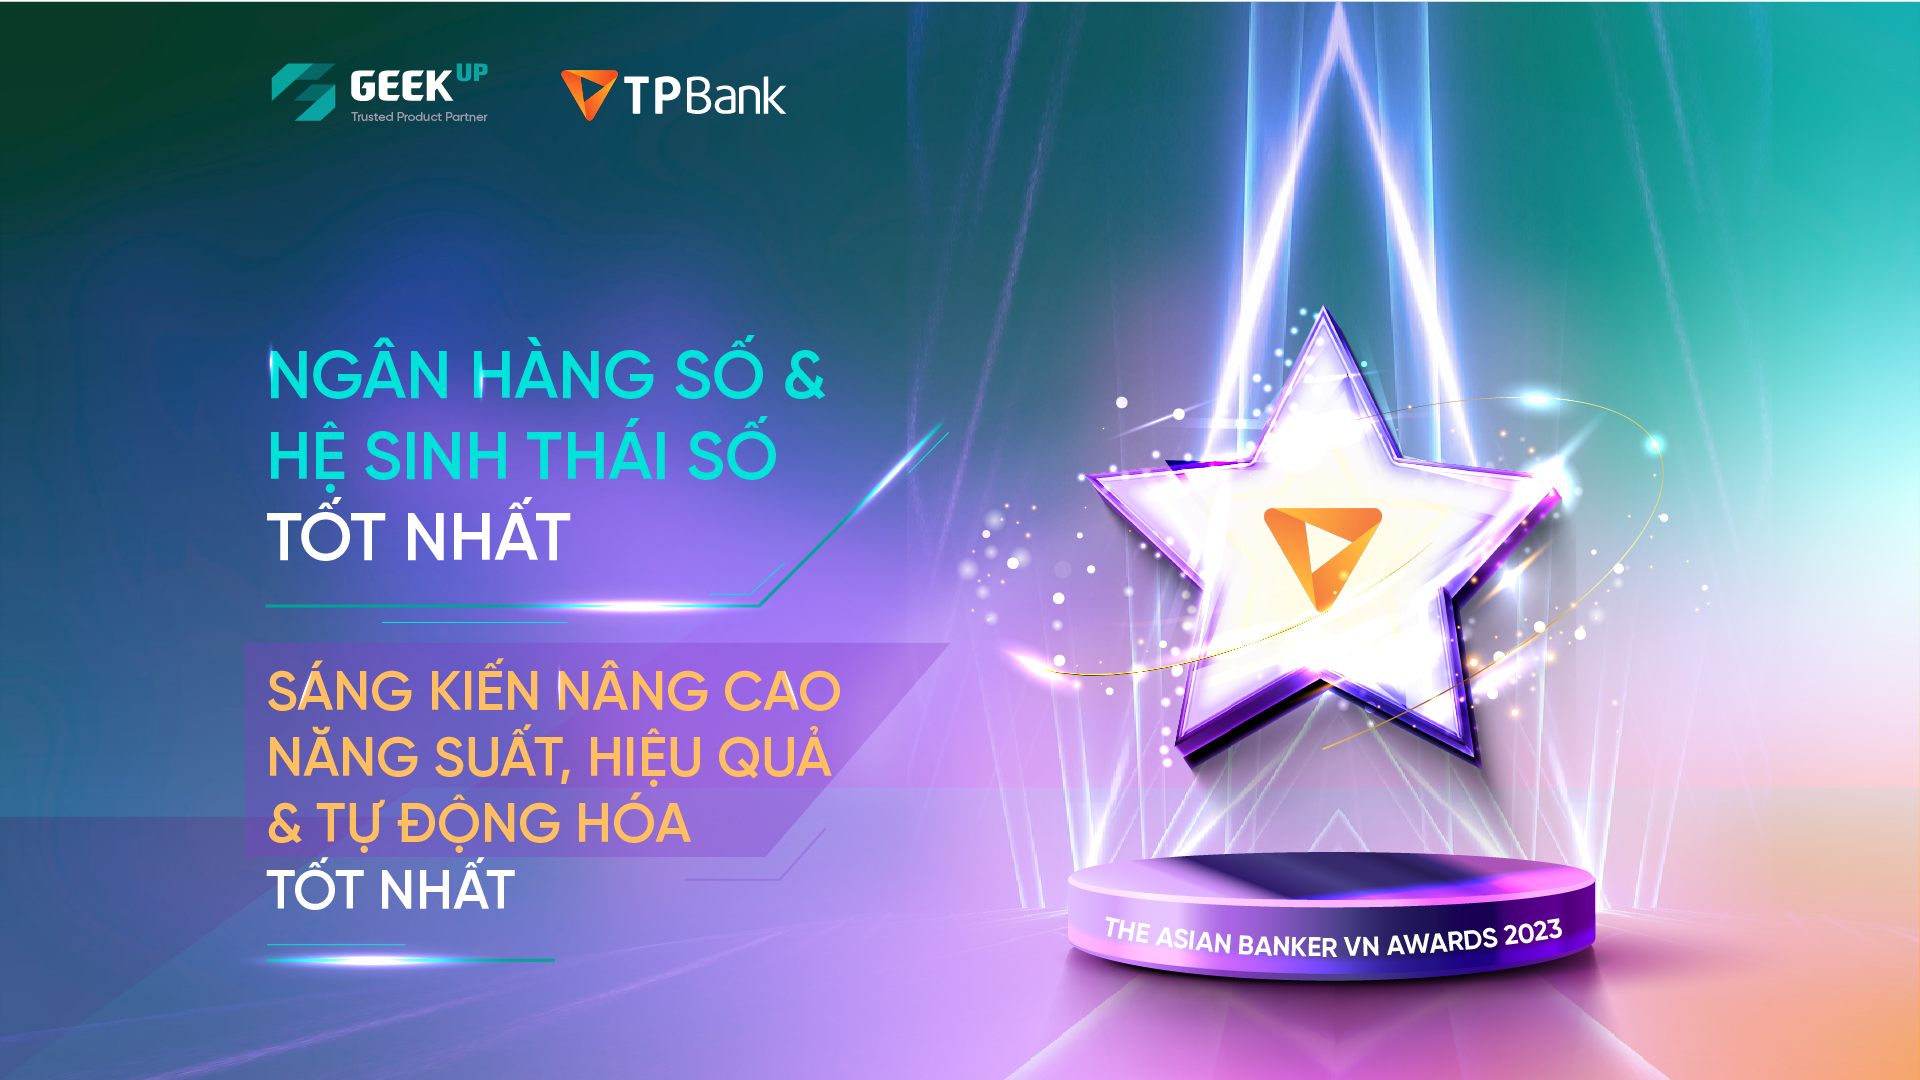 TPBank won 2 prestigious awards of The Asian Banker